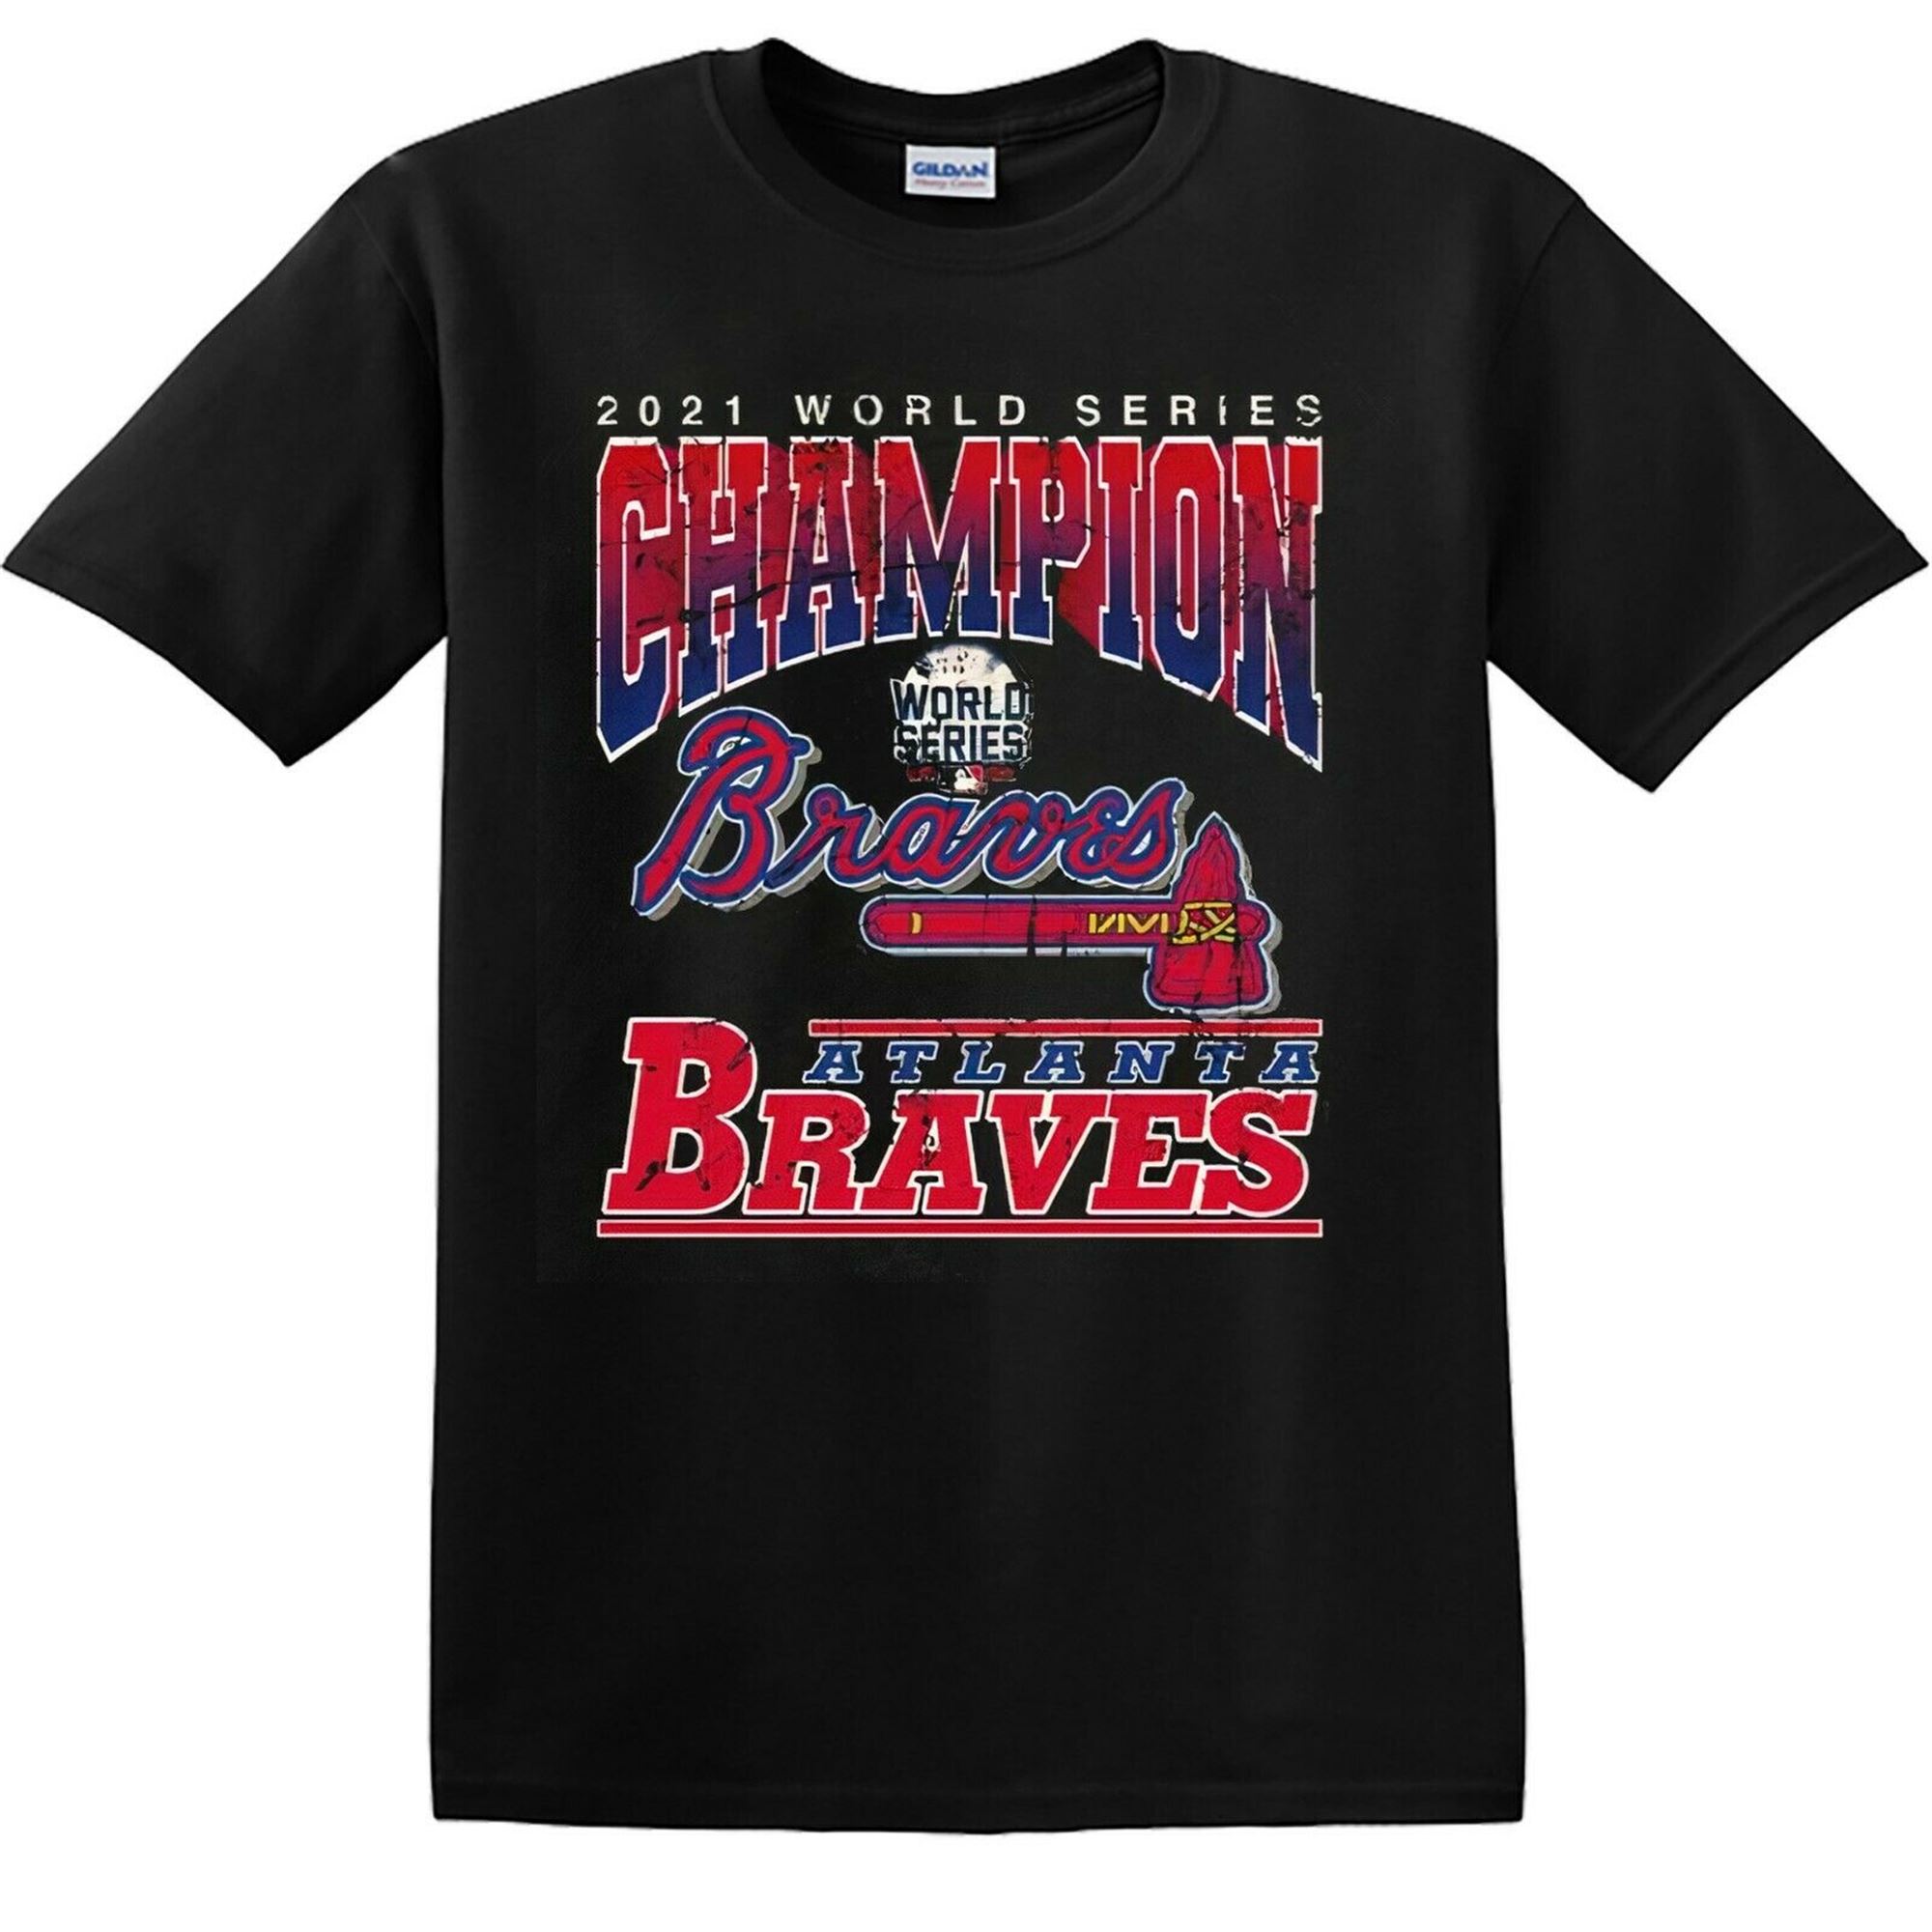 Atlanta Braves Champions 2021 World Series Black T-shirt Baseball Mlb S-5xl